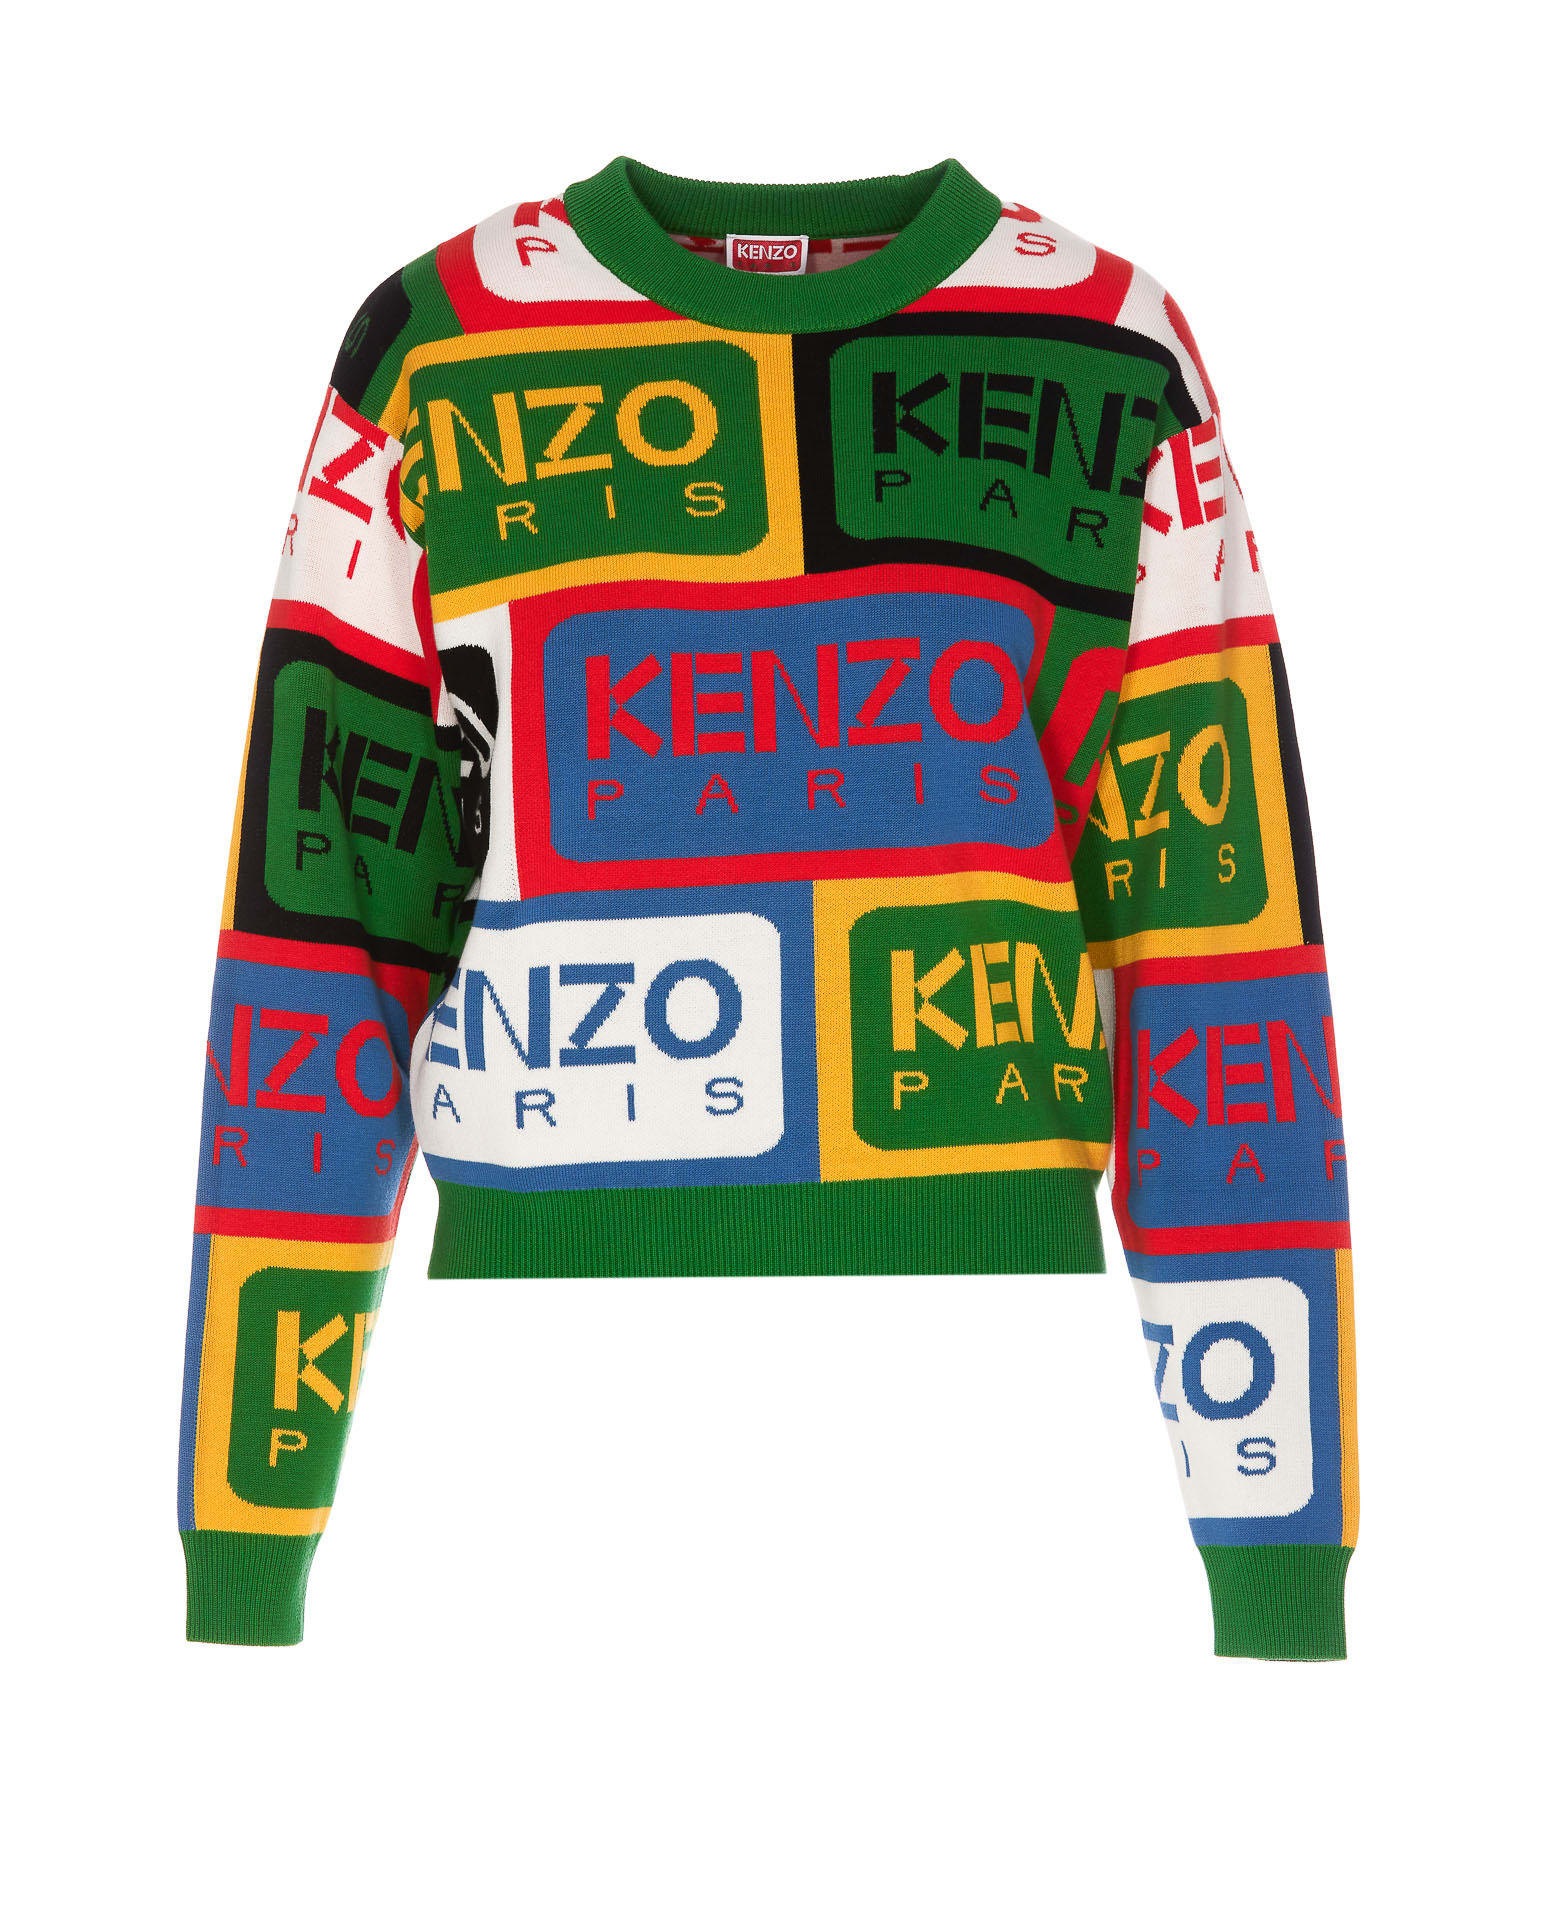 Kenzo Paris Label Sweater